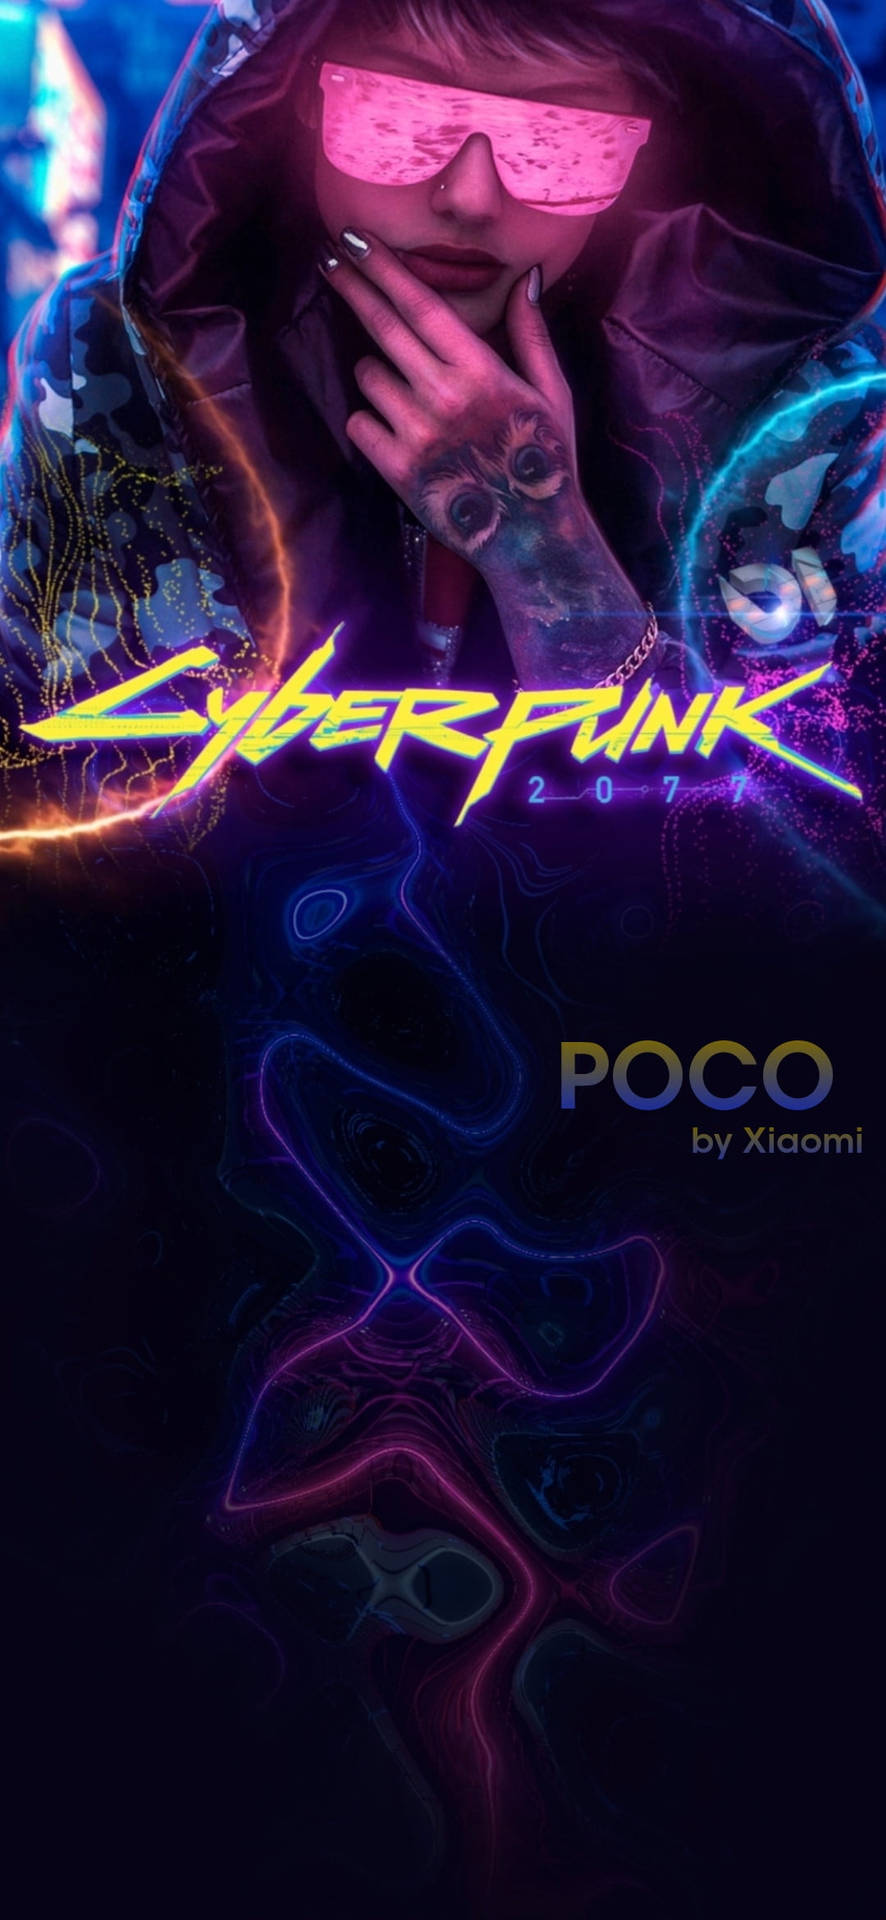 Pocox2 Cyberpunk Av Xiaomi Wallpaper